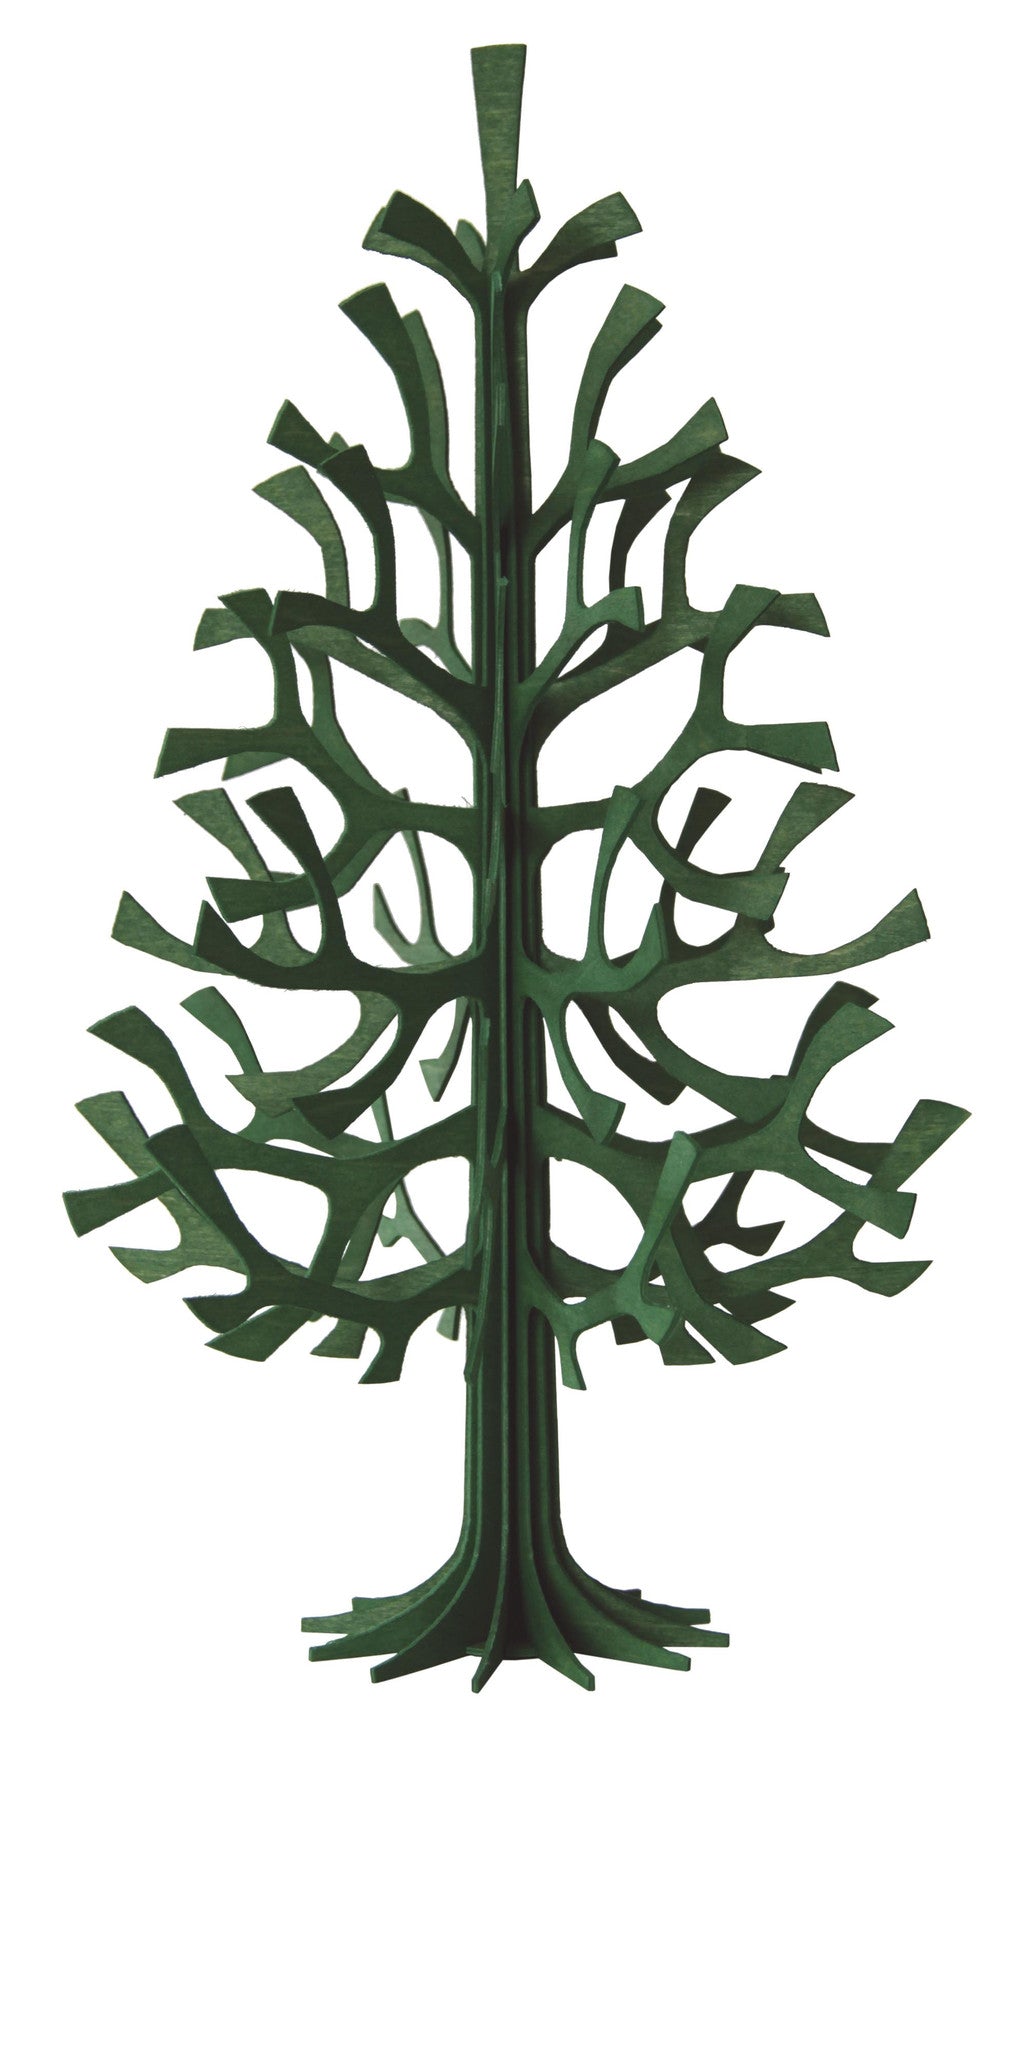 Spruce Tree by Lovi, 180cm / 70in